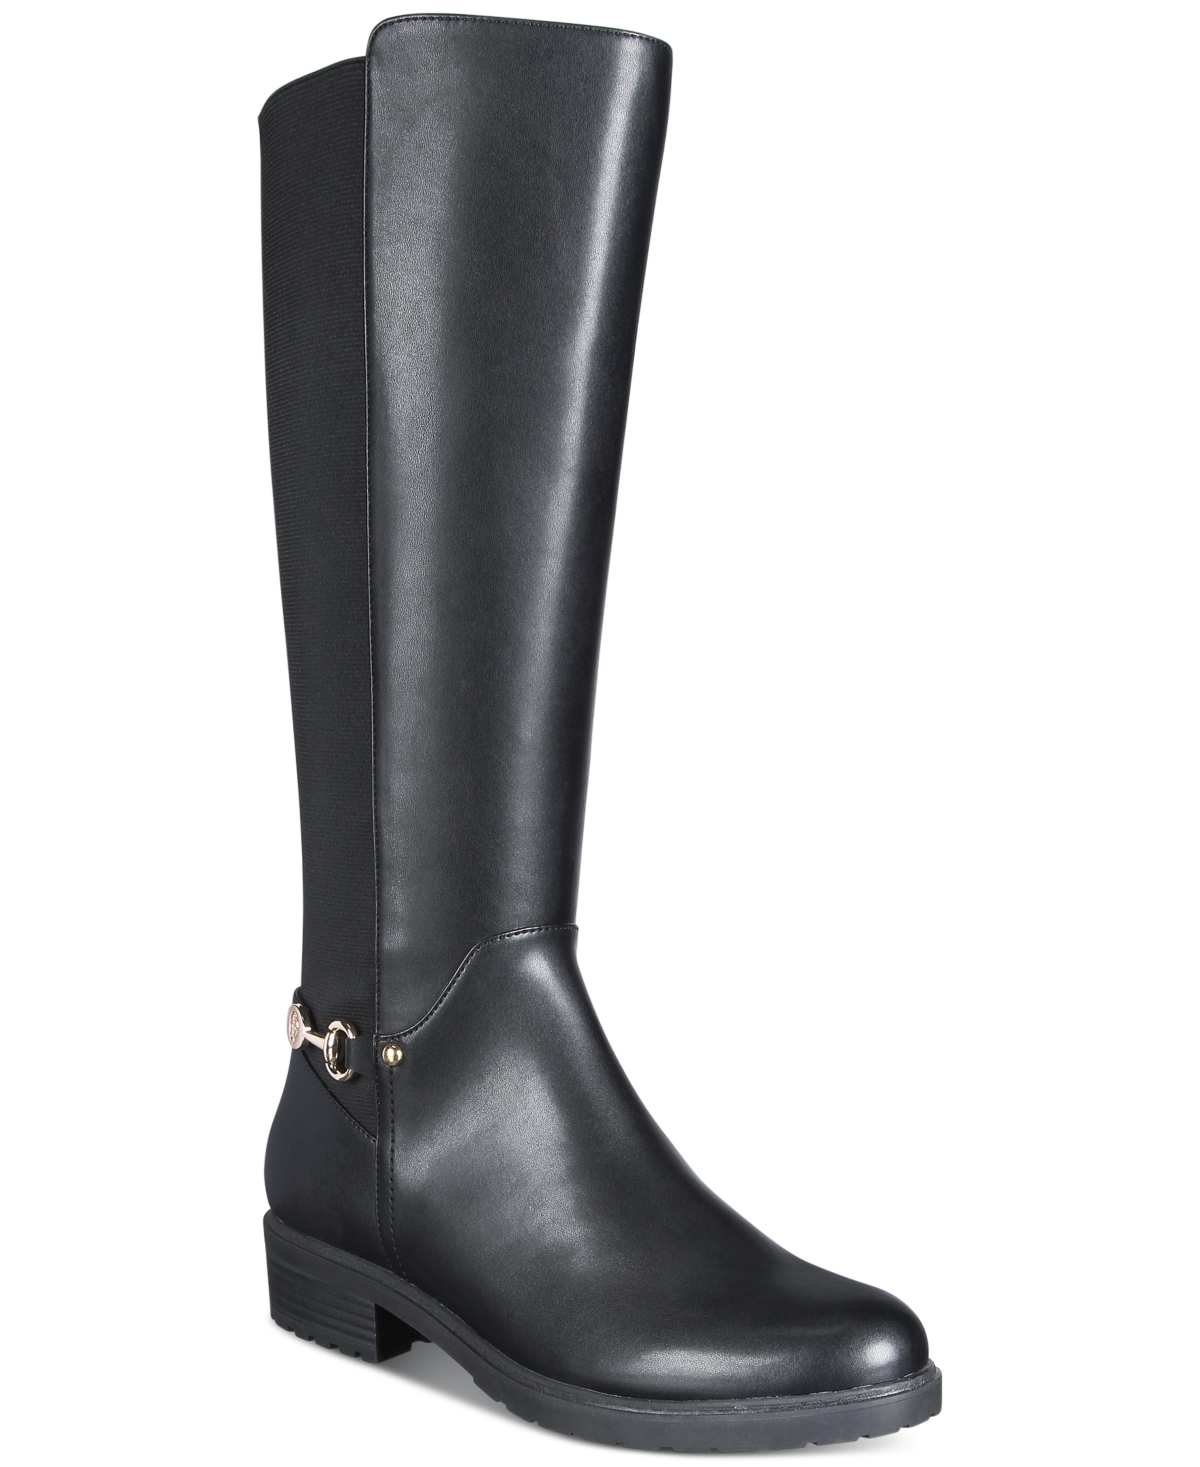 Women's Barnibee Memory Foam Knee High Riding Boots, Created for Macy's - Black